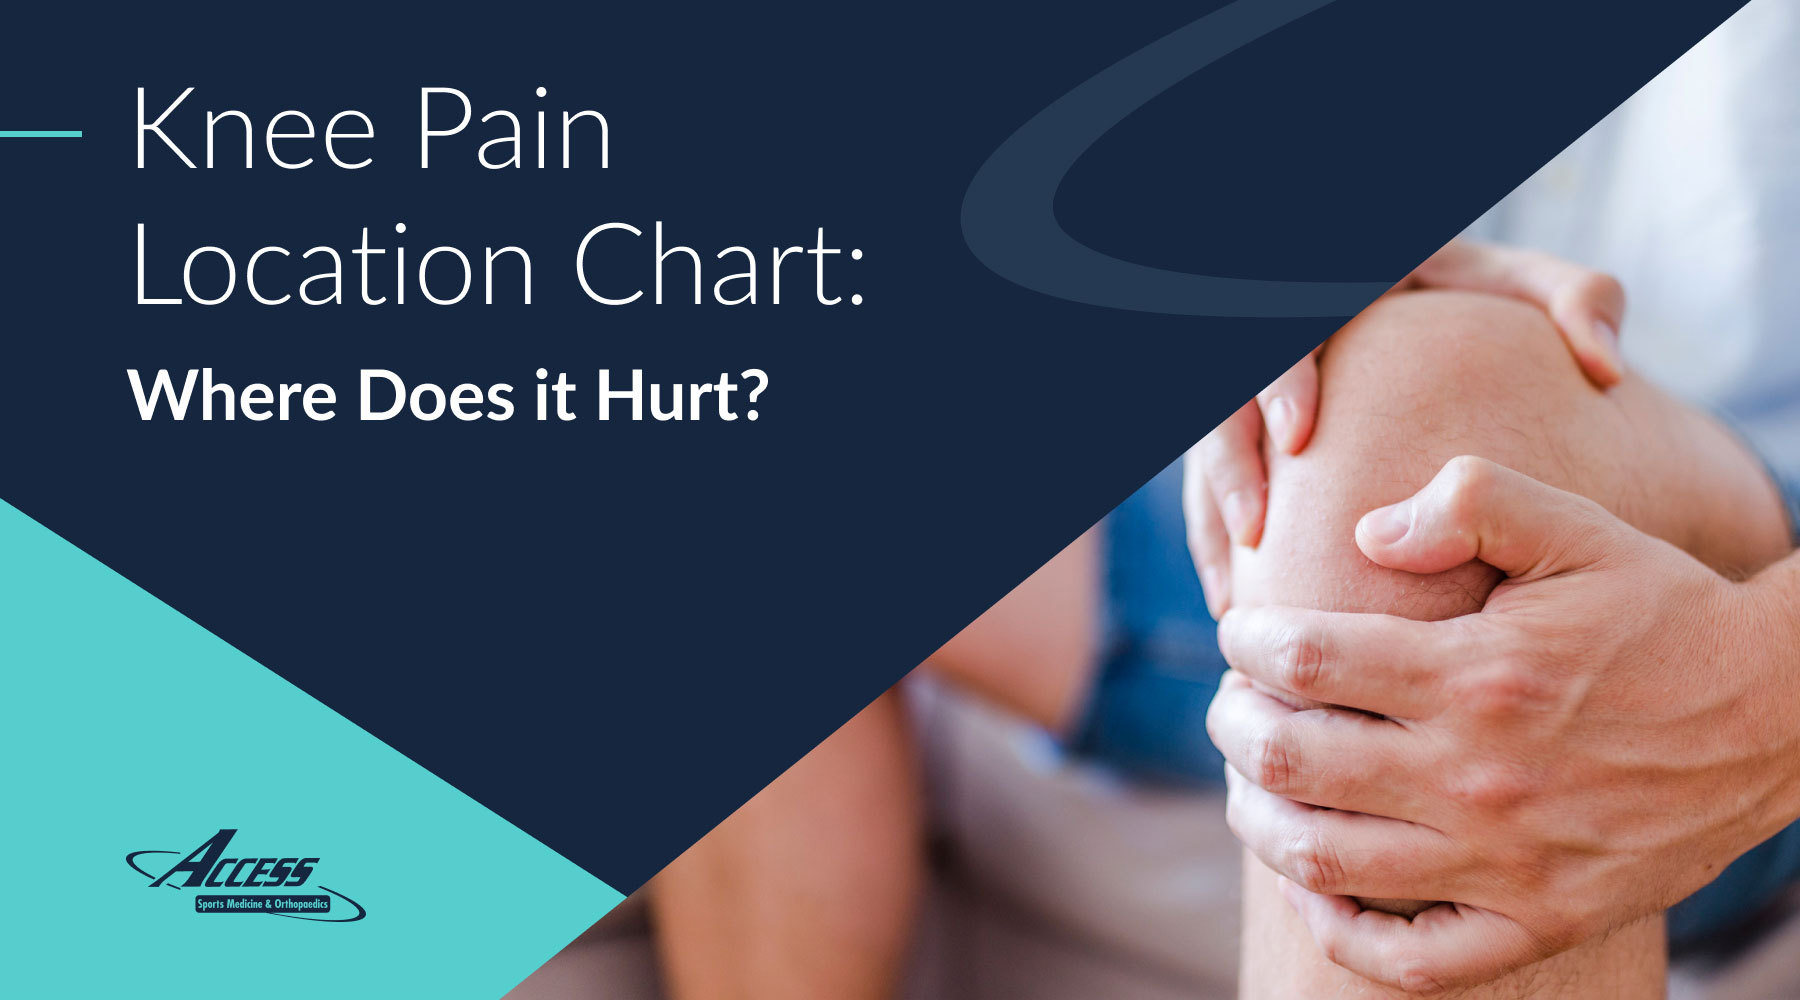 Knee pain location chart